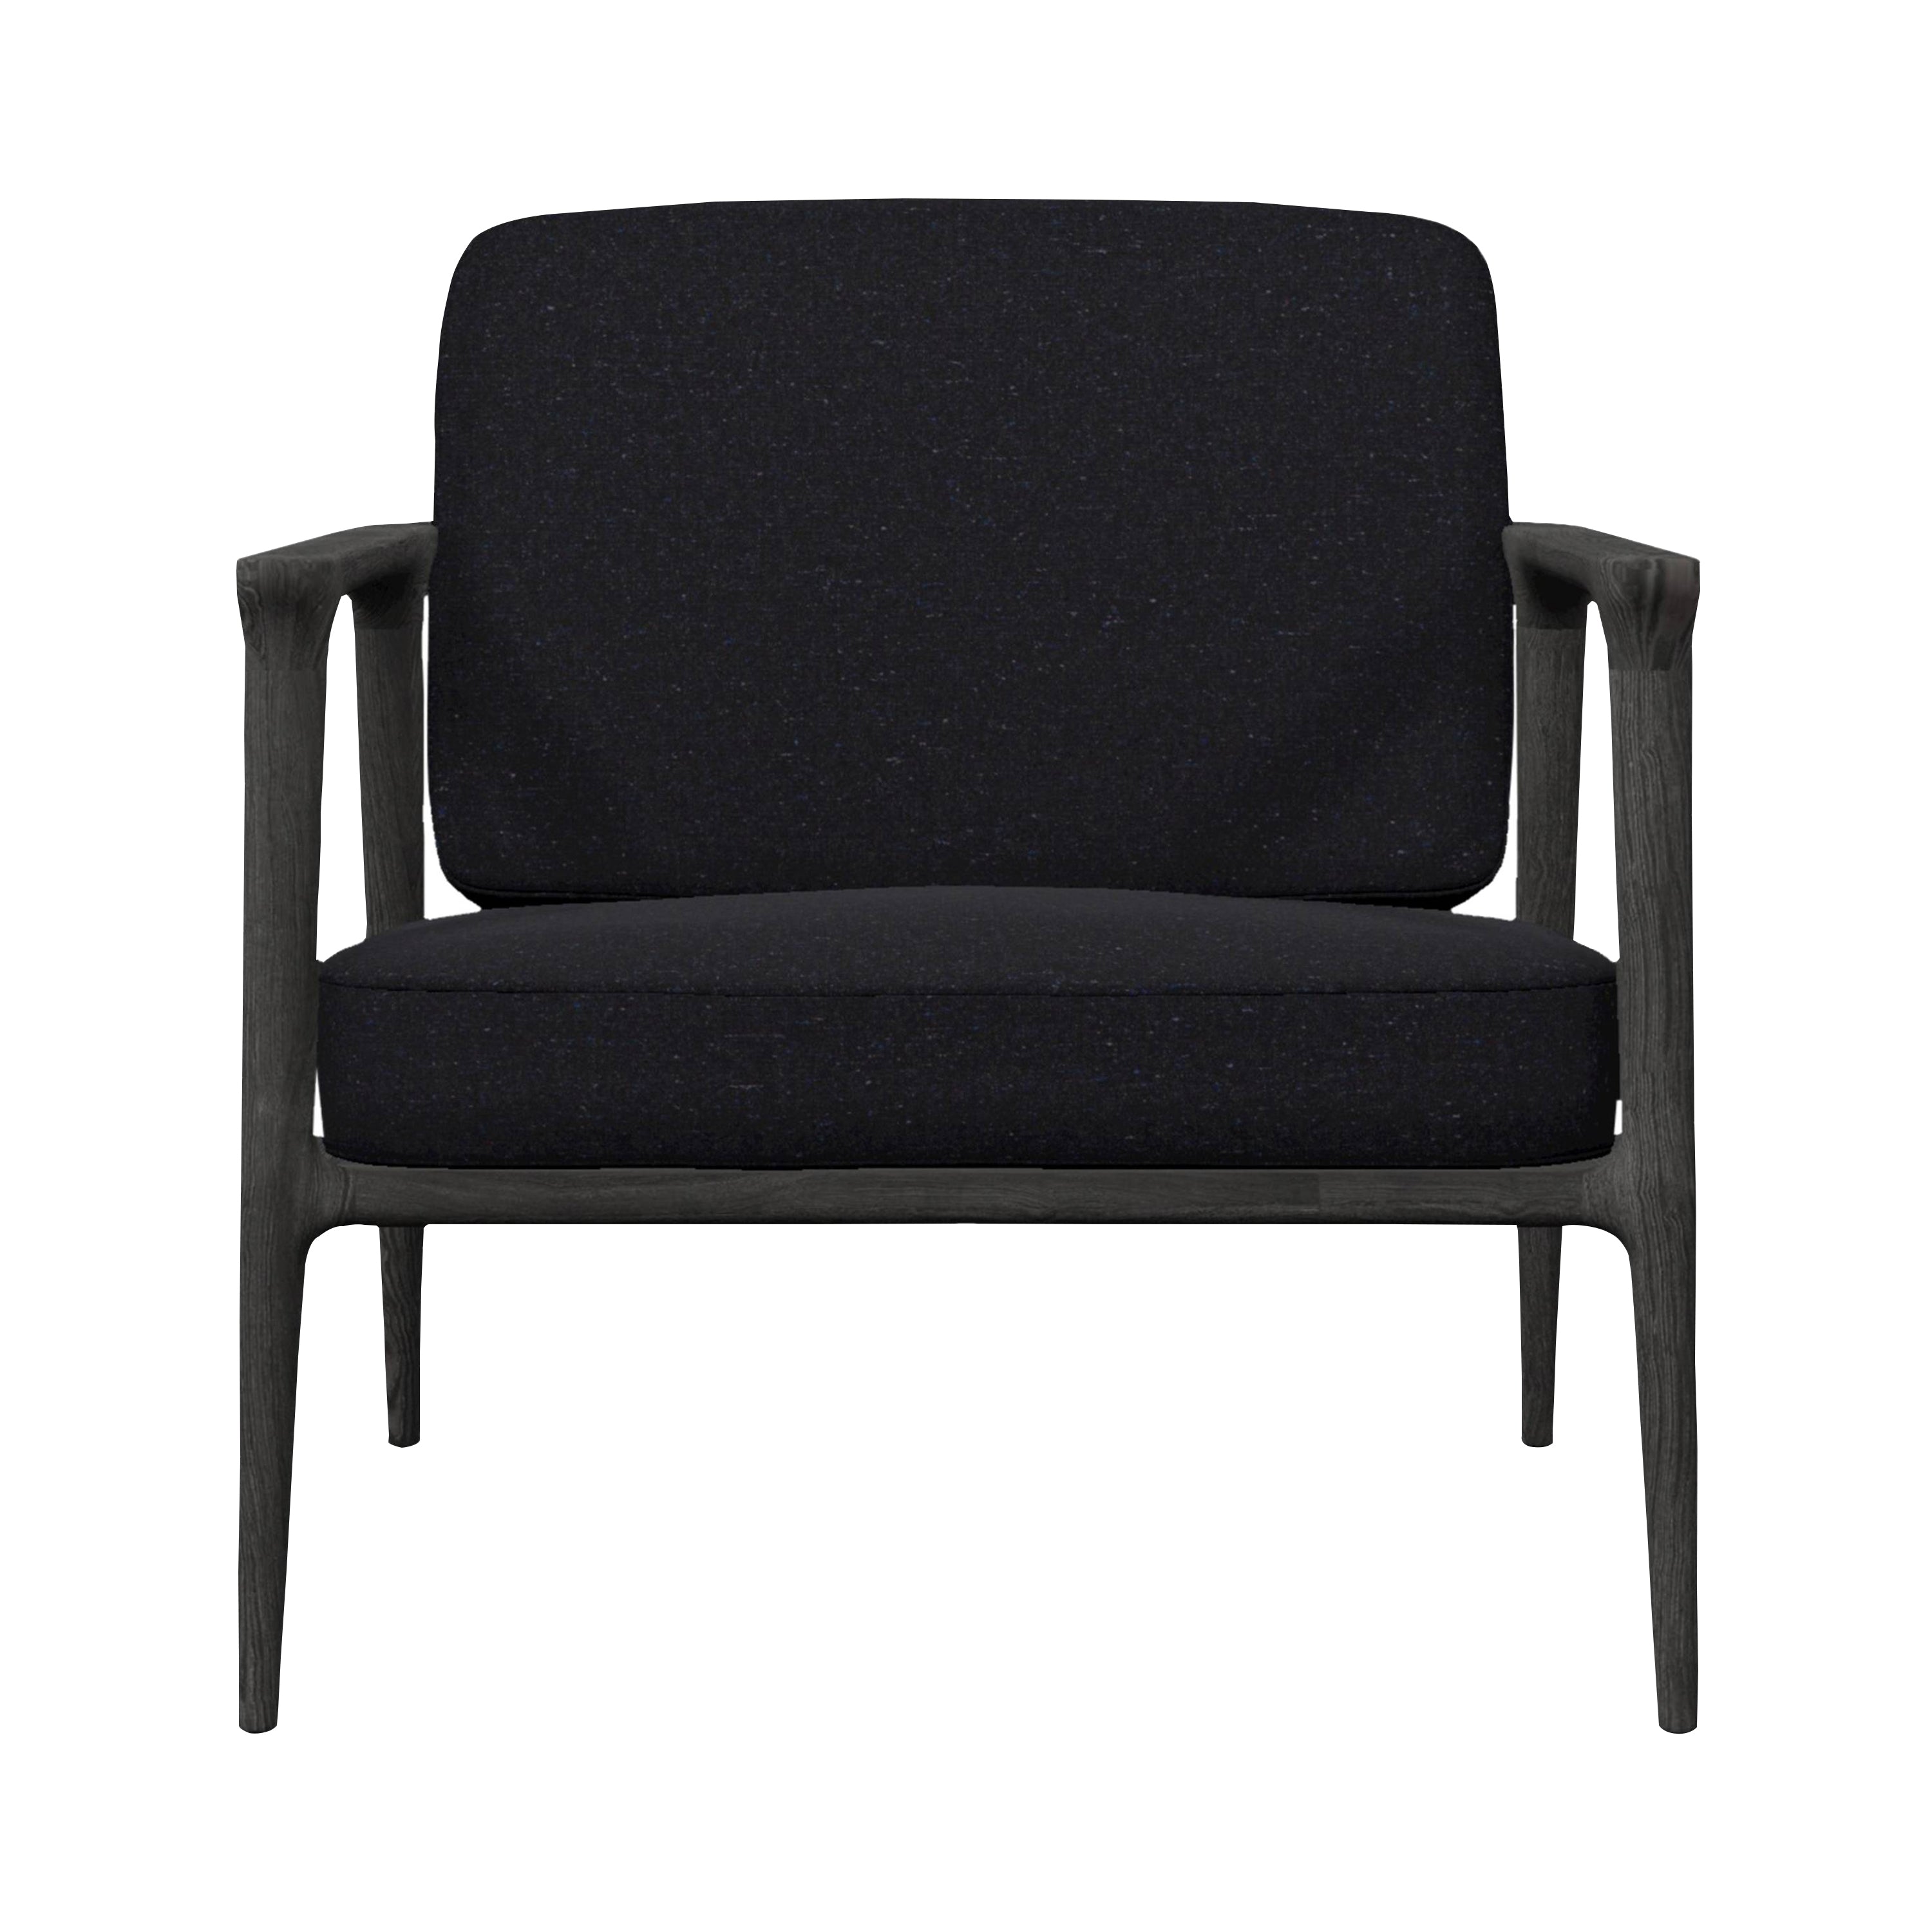 Zio Lounge Chair: Grey